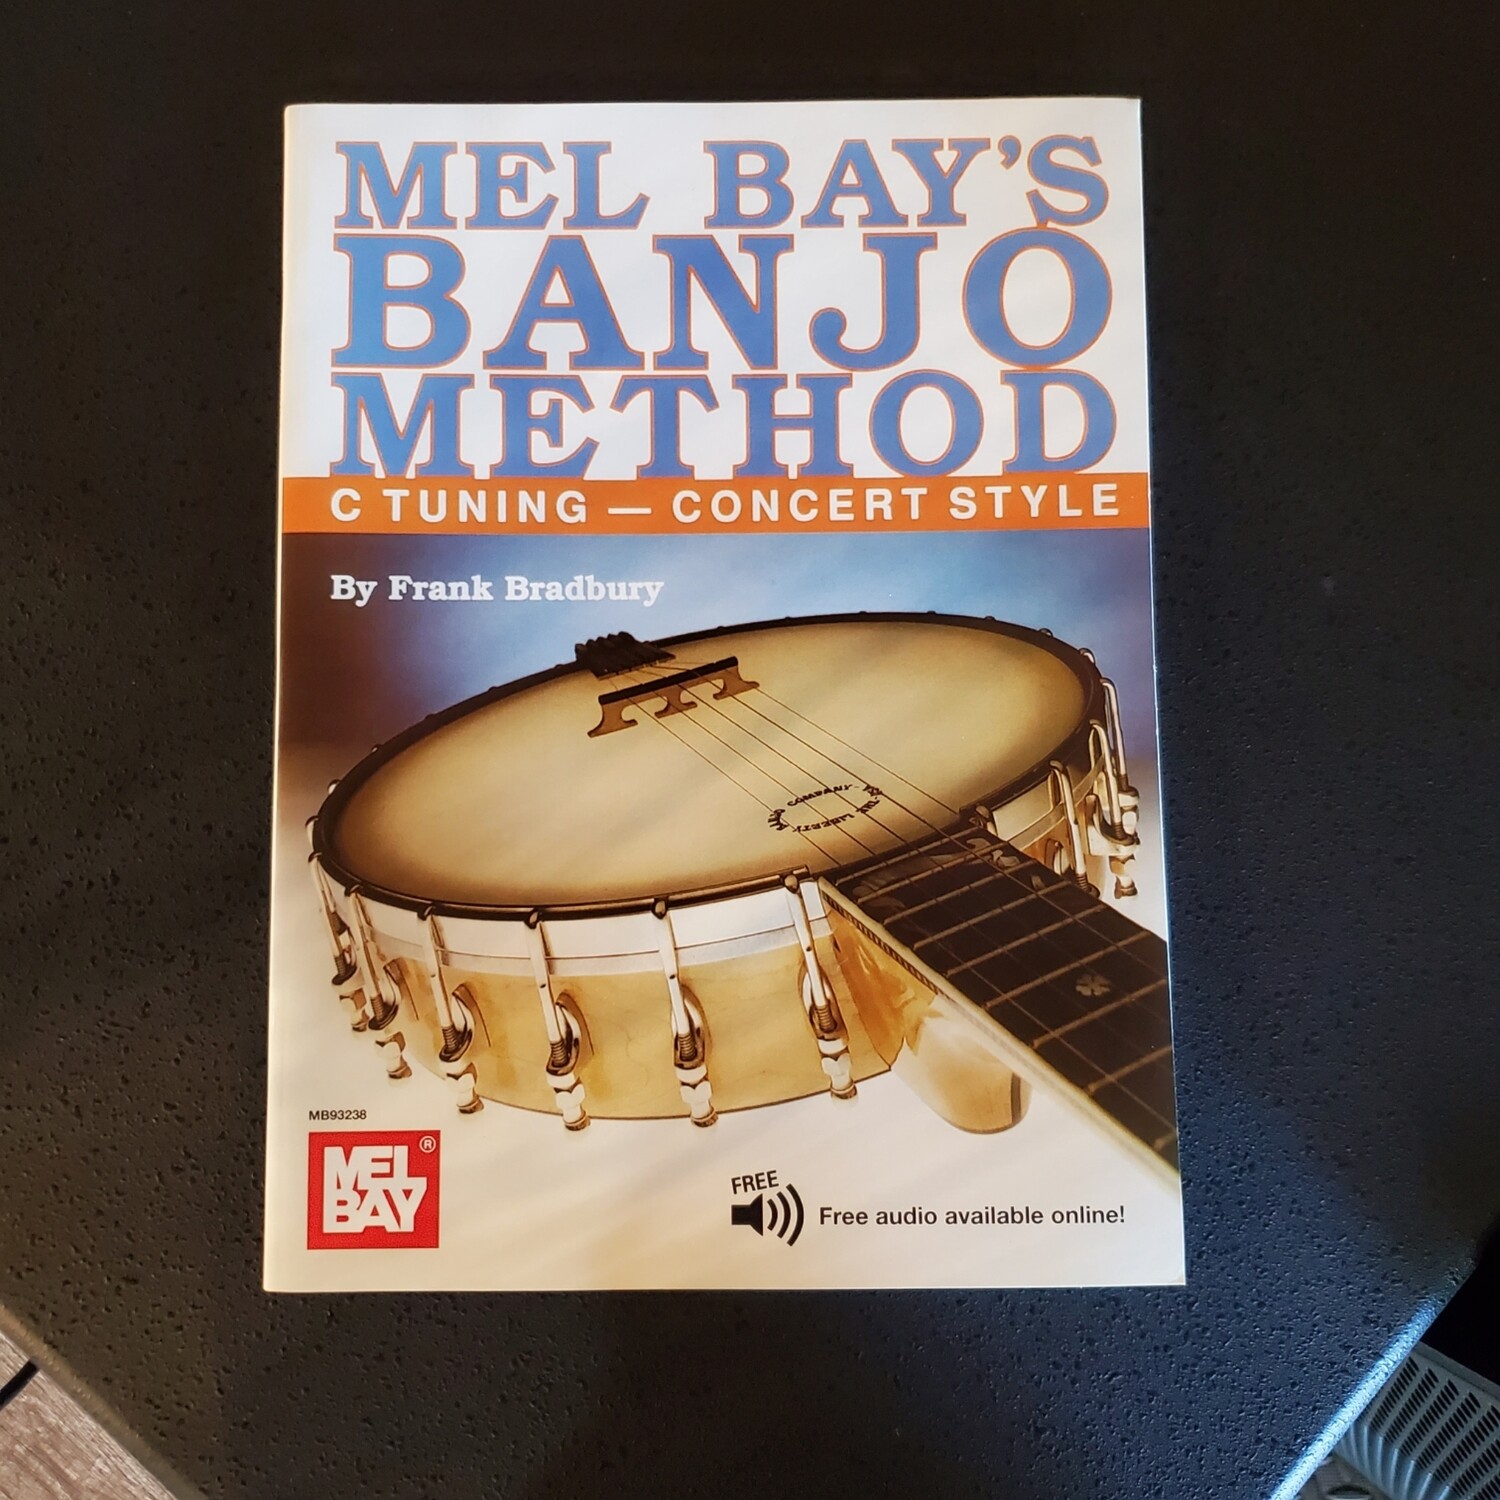 Mel Bay's Banjo Method C Tuning Concert Style